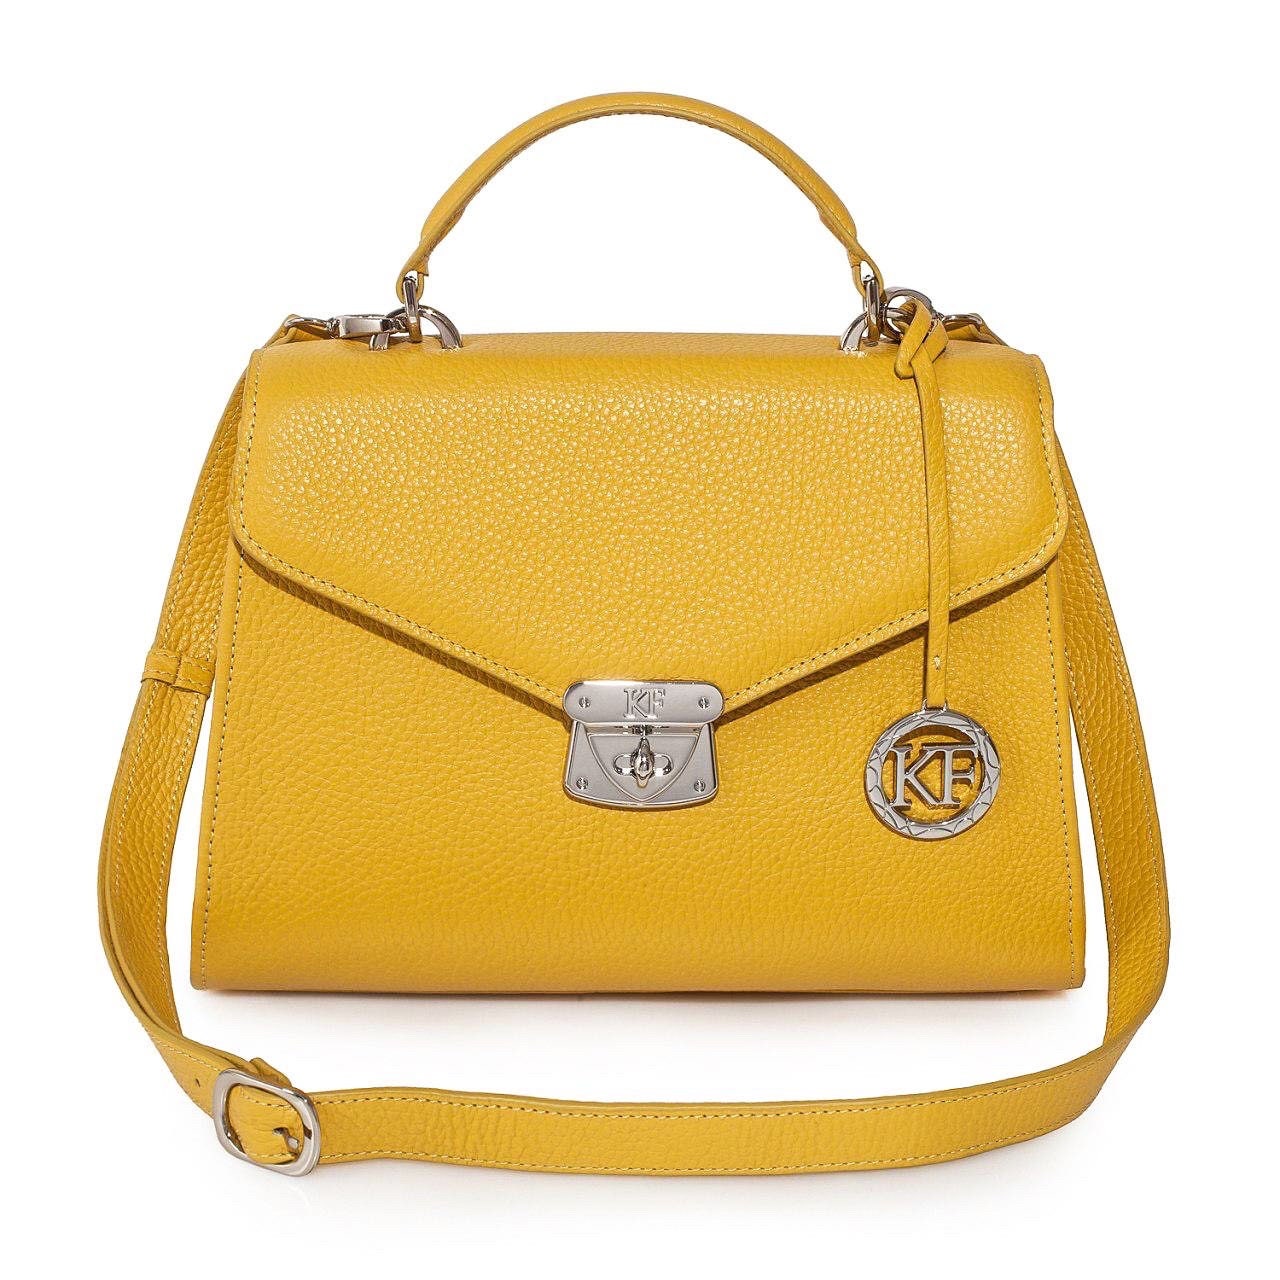 Leather Top Handle Bag Yellow Leather Handbag Top Handle | Etsy